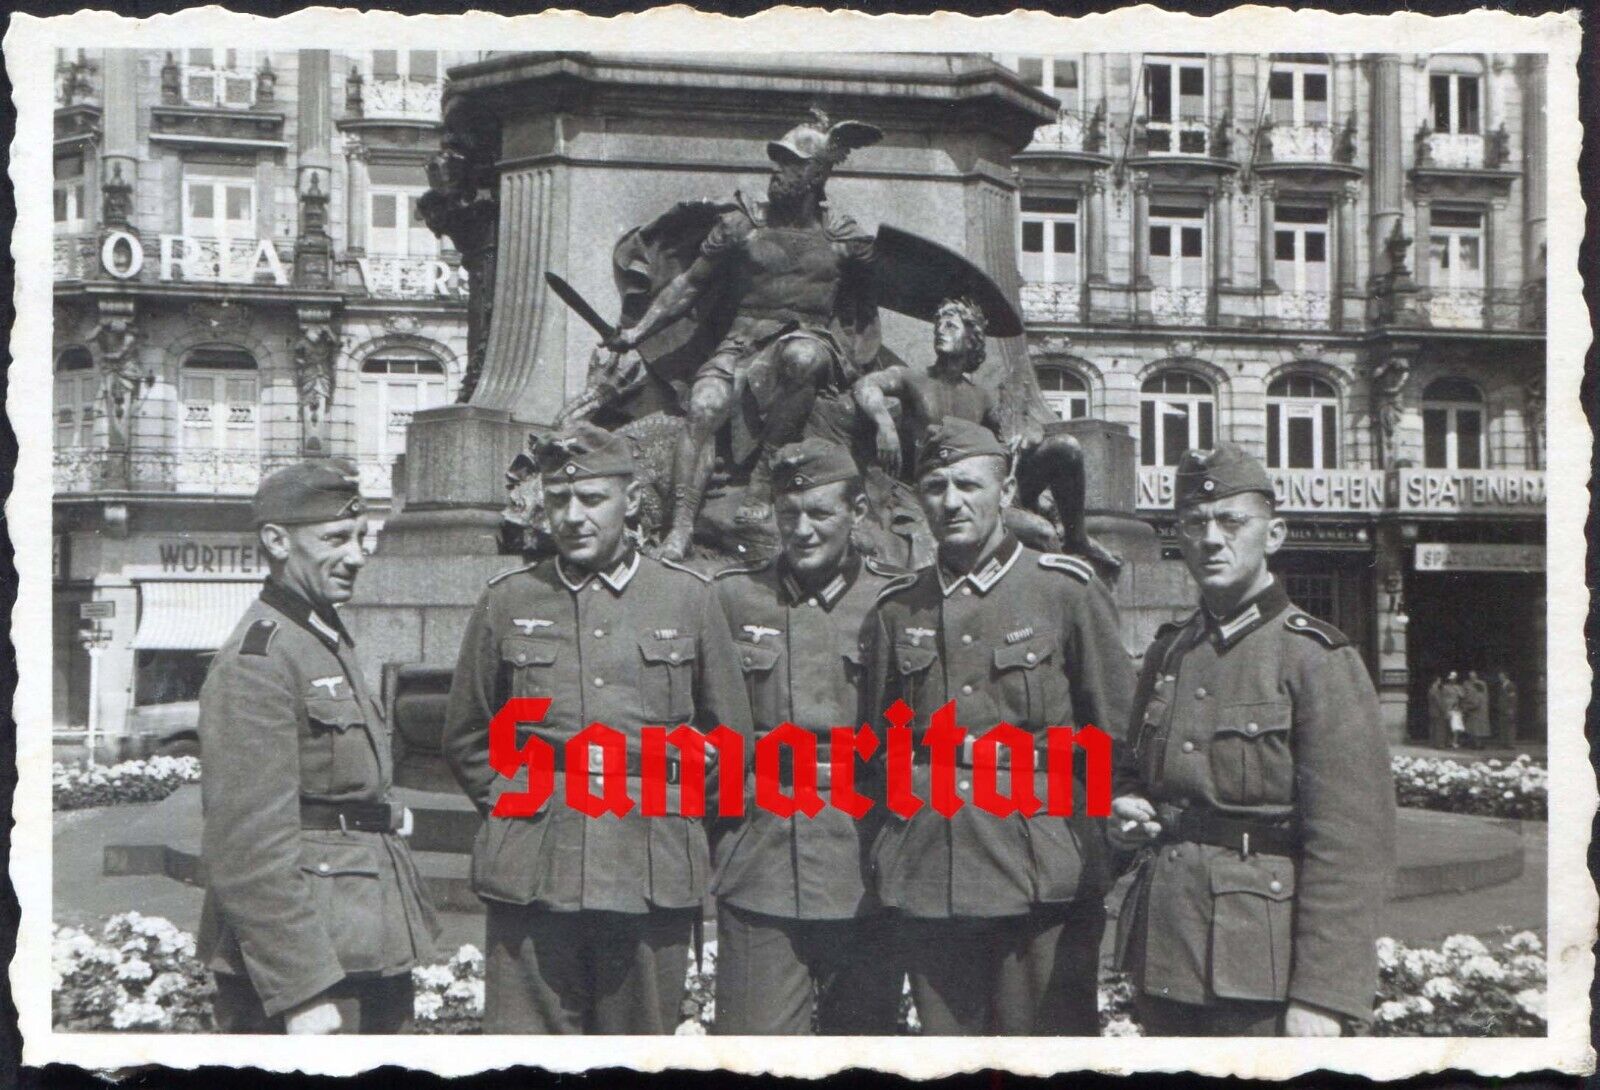 I10/31 WW2 ORIGINAL PHOTO OF GERMAN WEHRMACHT SOLDIERS NEAR THEATER AACHEN